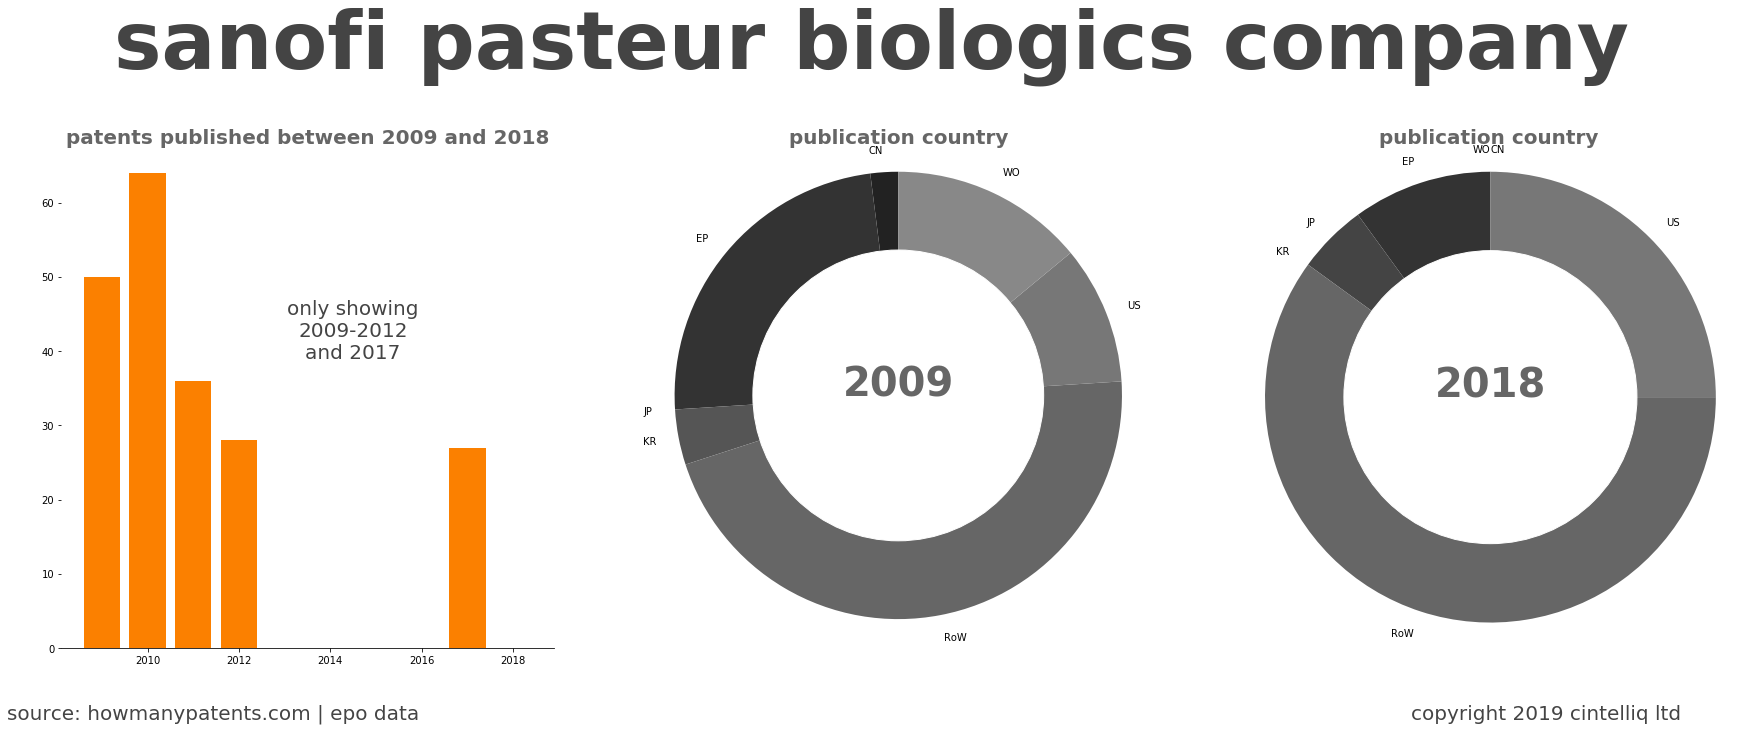 summary of patents for Sanofi Pasteur Biologics Company